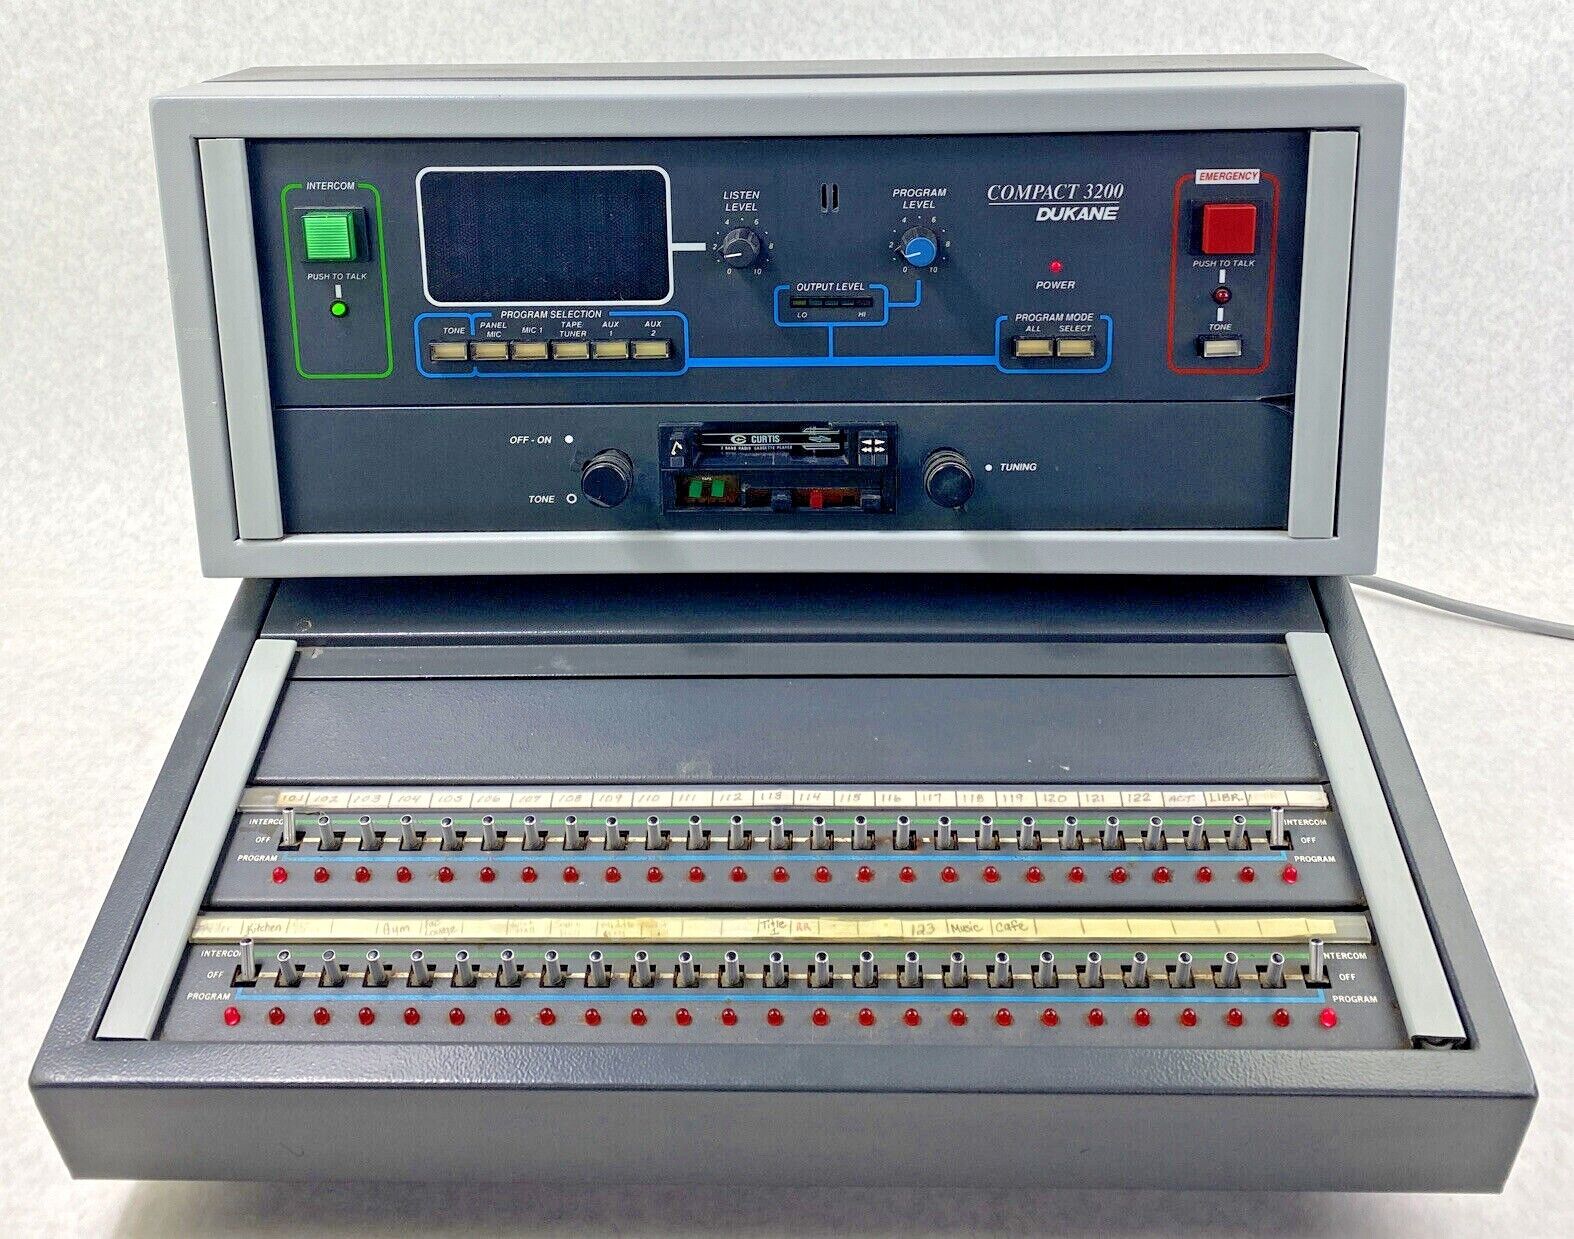 Dukane Compact 3200 Model 12A3200-50 Intercom School PA System